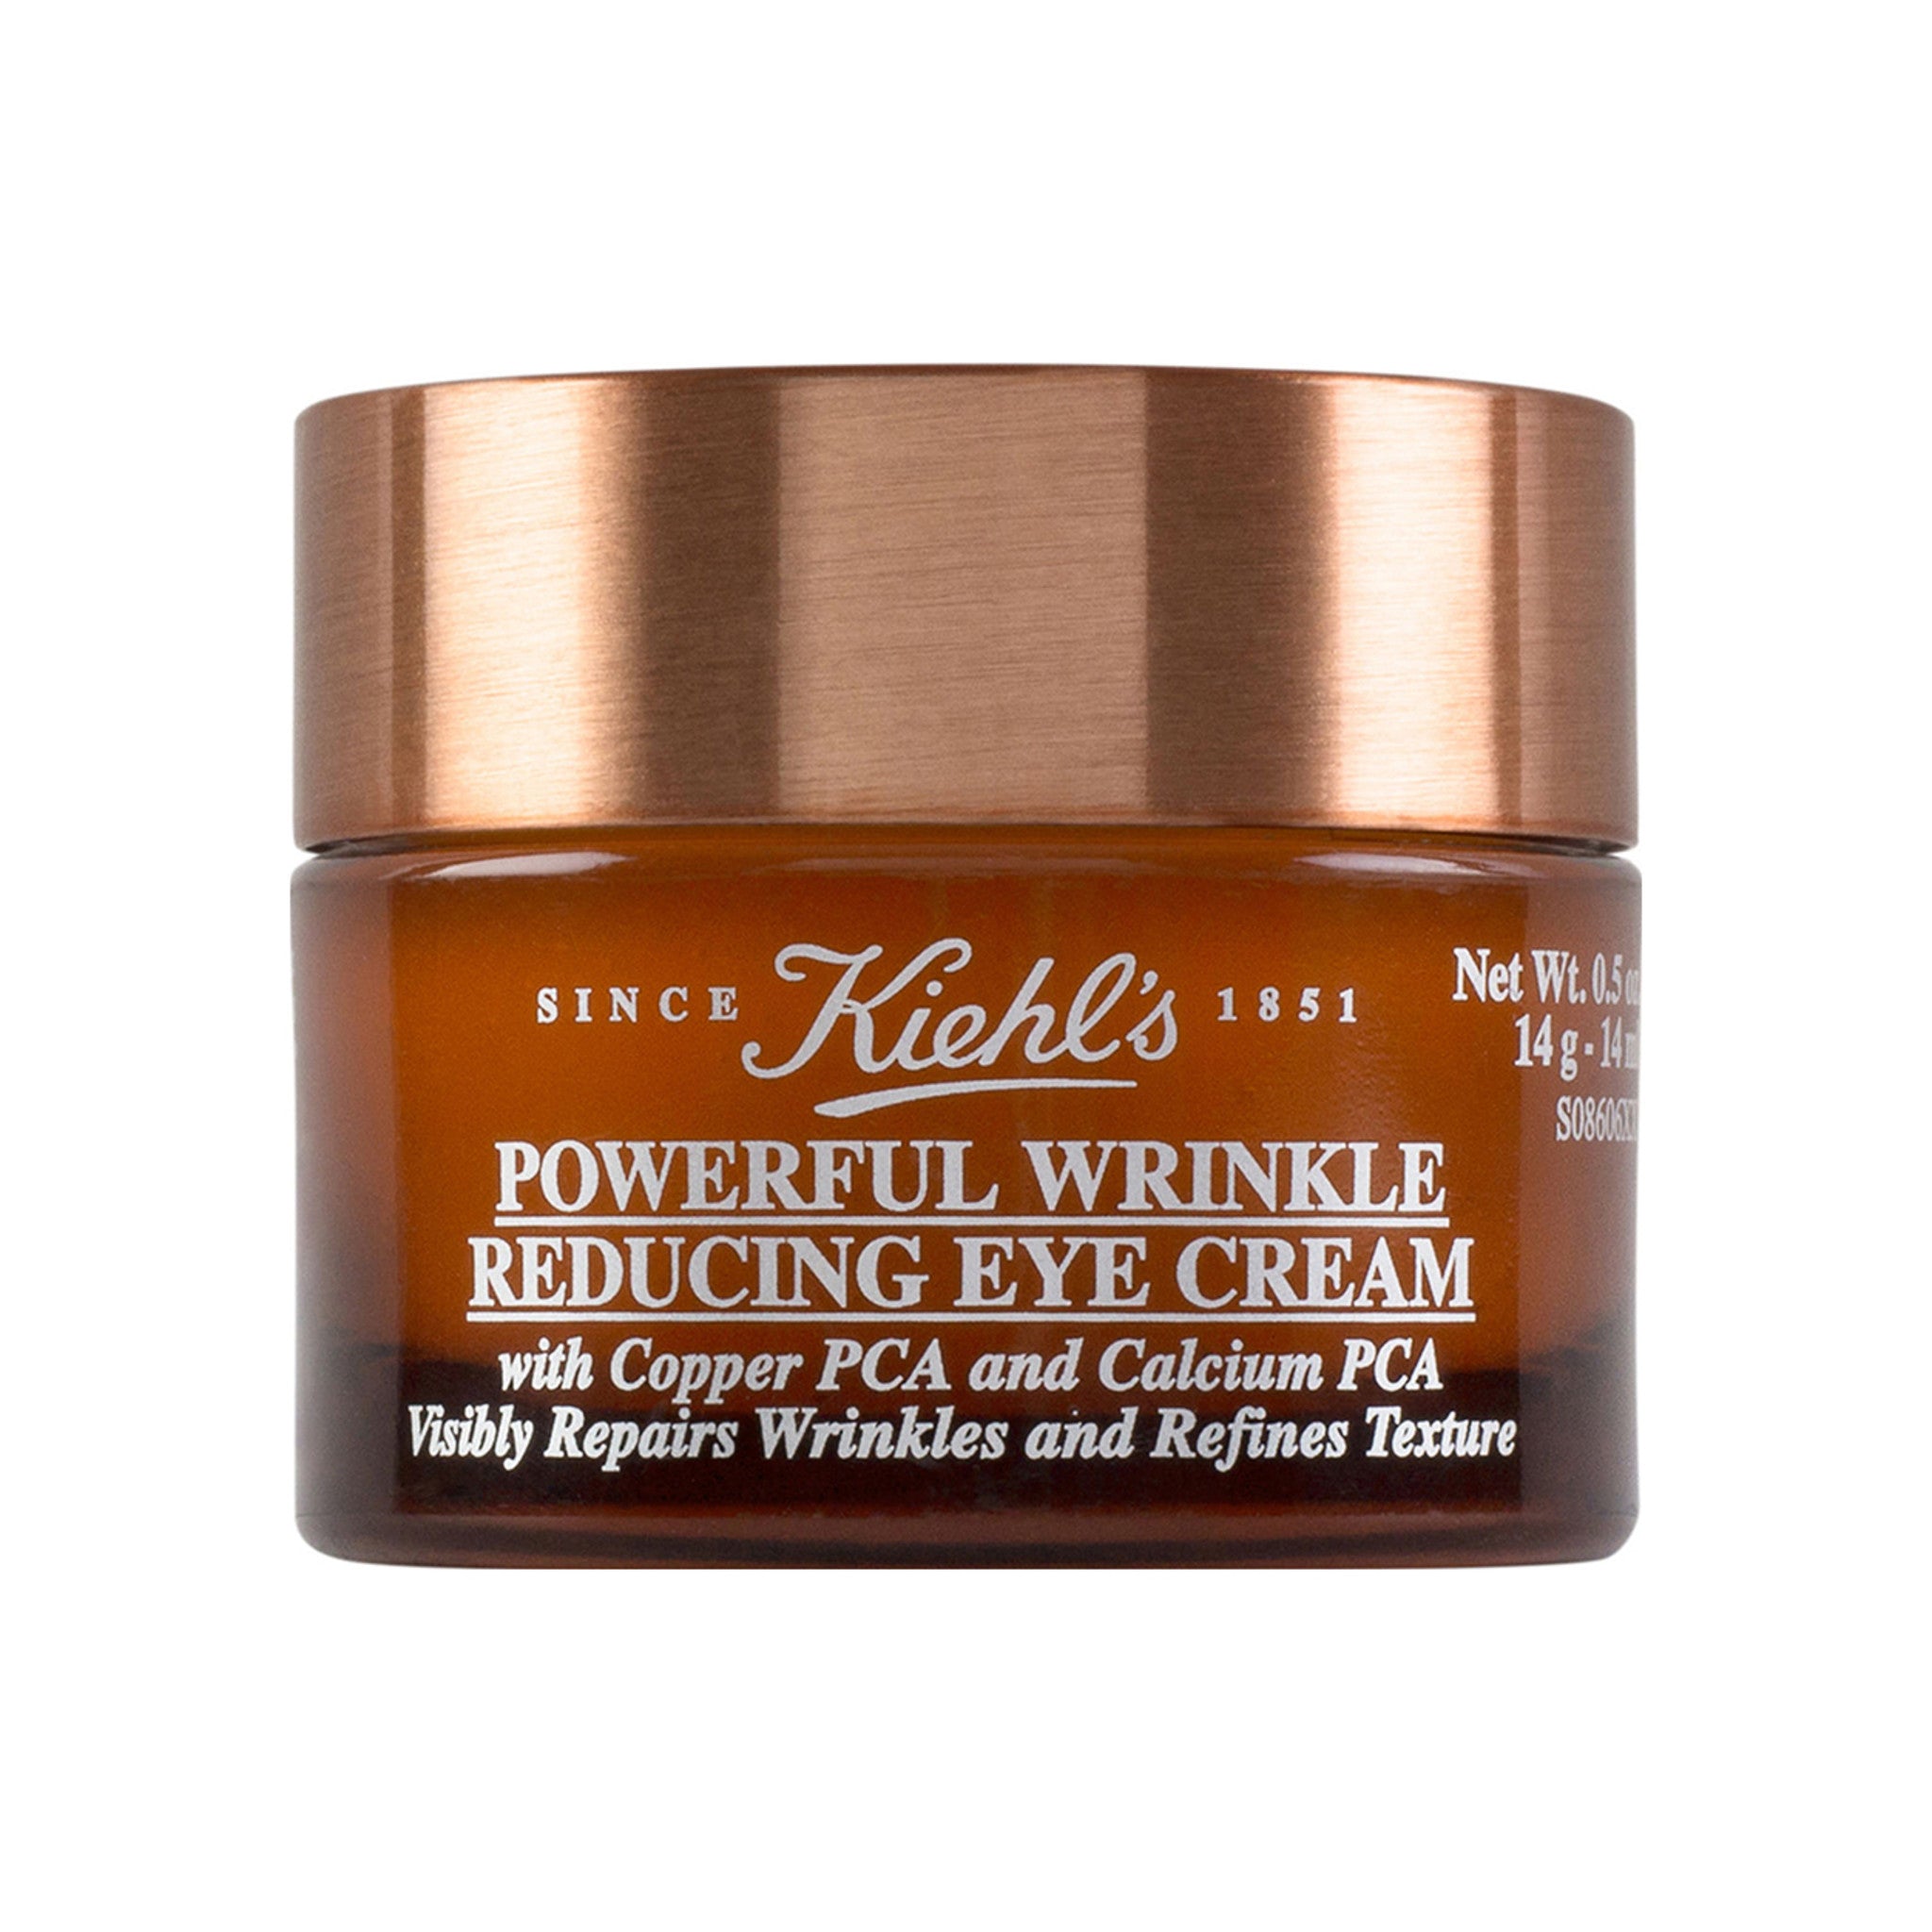 Kiehl's Since 1851 Powerful Wrinkle Reducing Eye Cream main image.